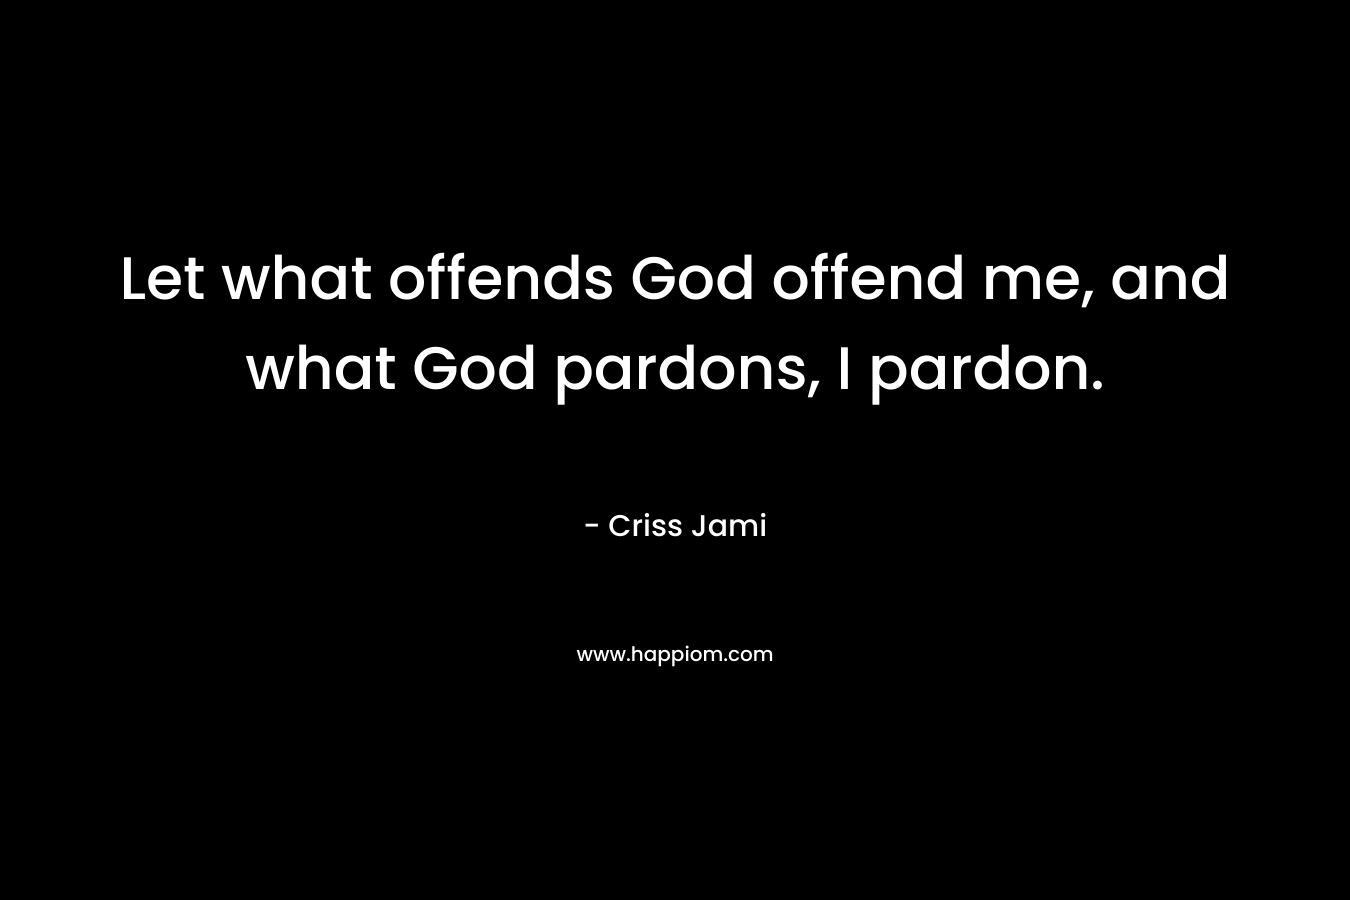 Let what offends God offend me, and what God pardons, I pardon.